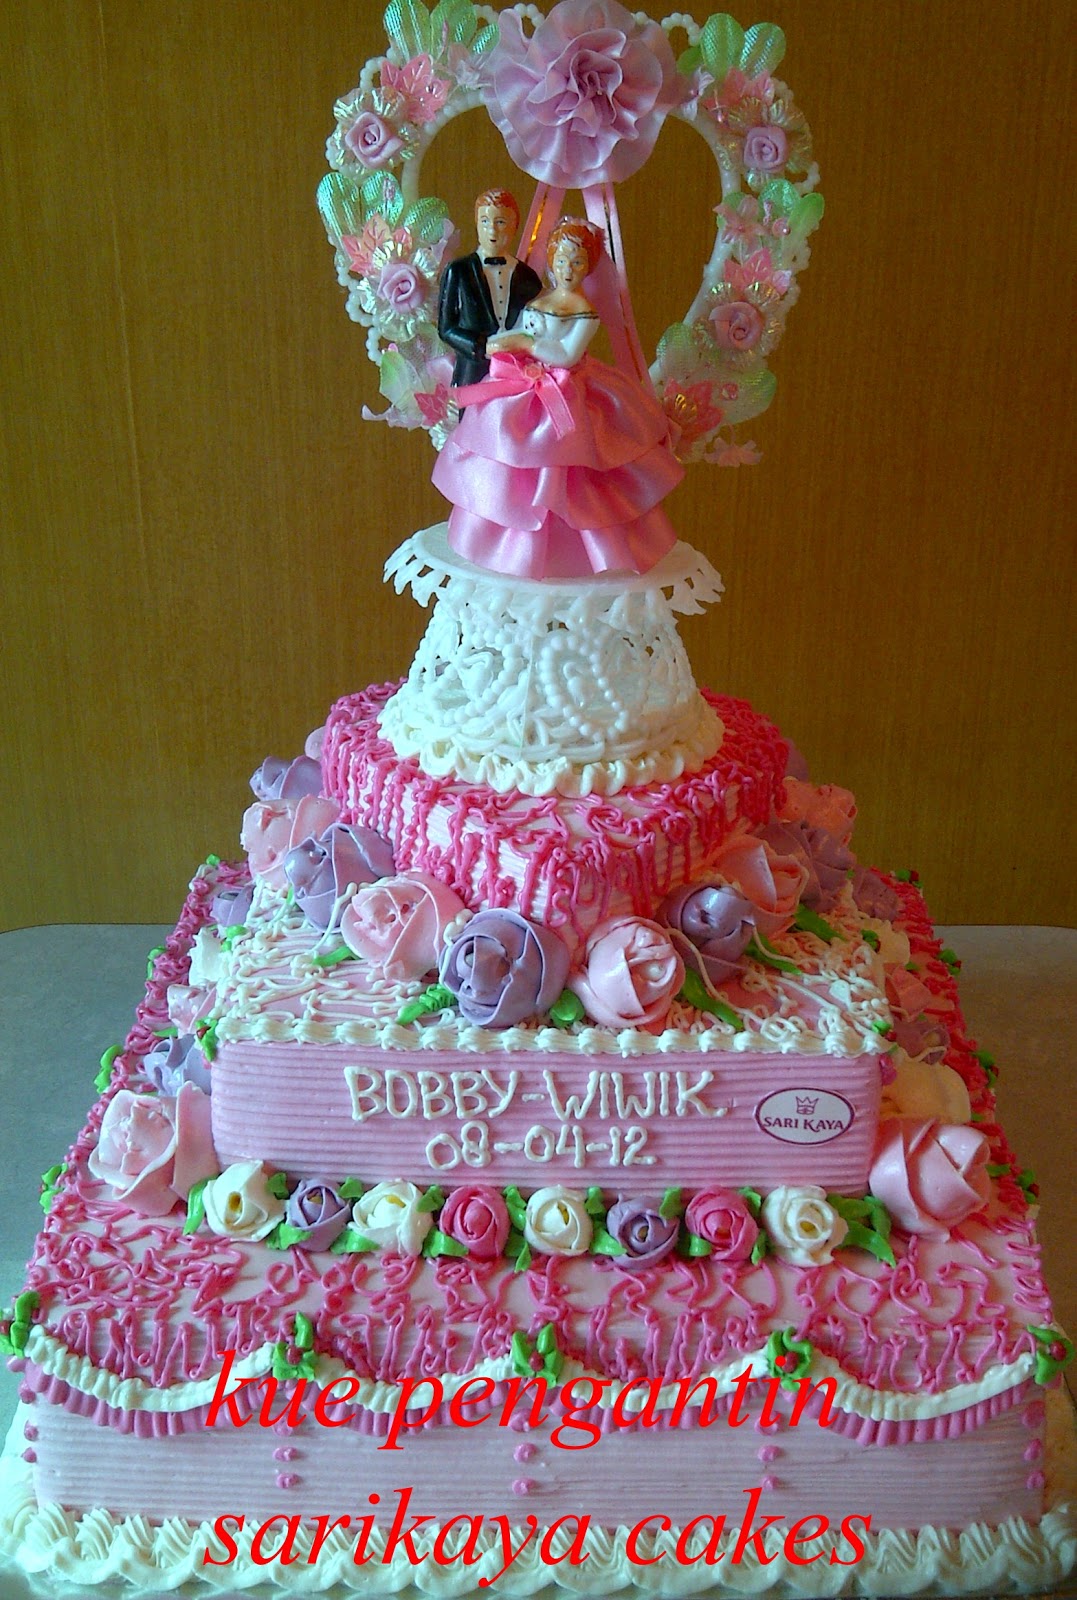 Sarikaya cakes: KUE PENGANTIN STACK BY SARIKAYA CAKES